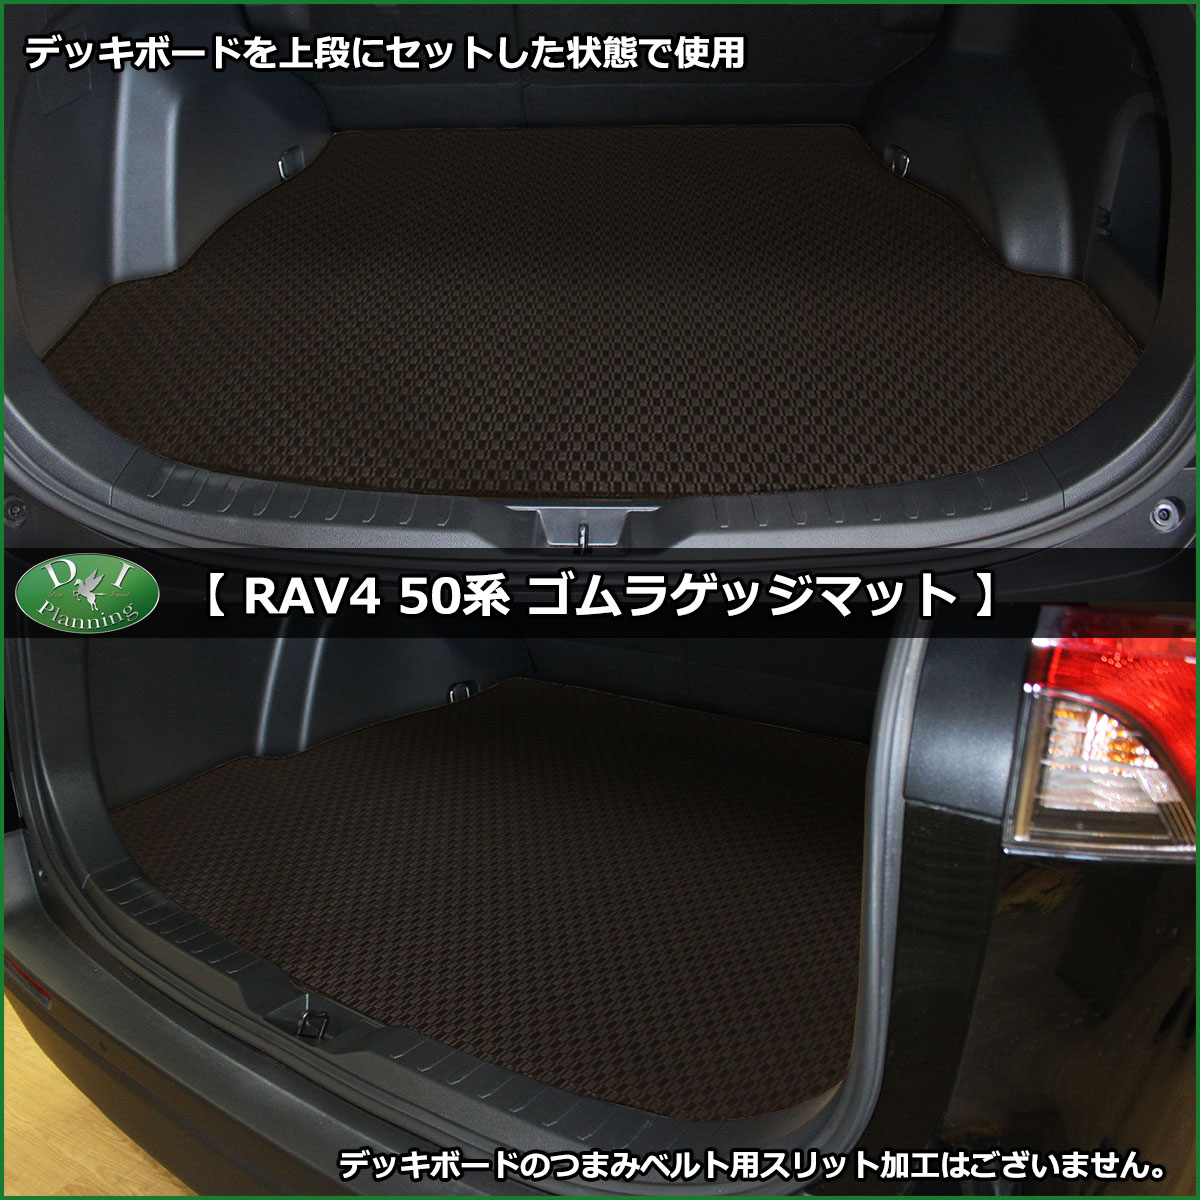 RAV4　ゴムラゲッジマット装着例